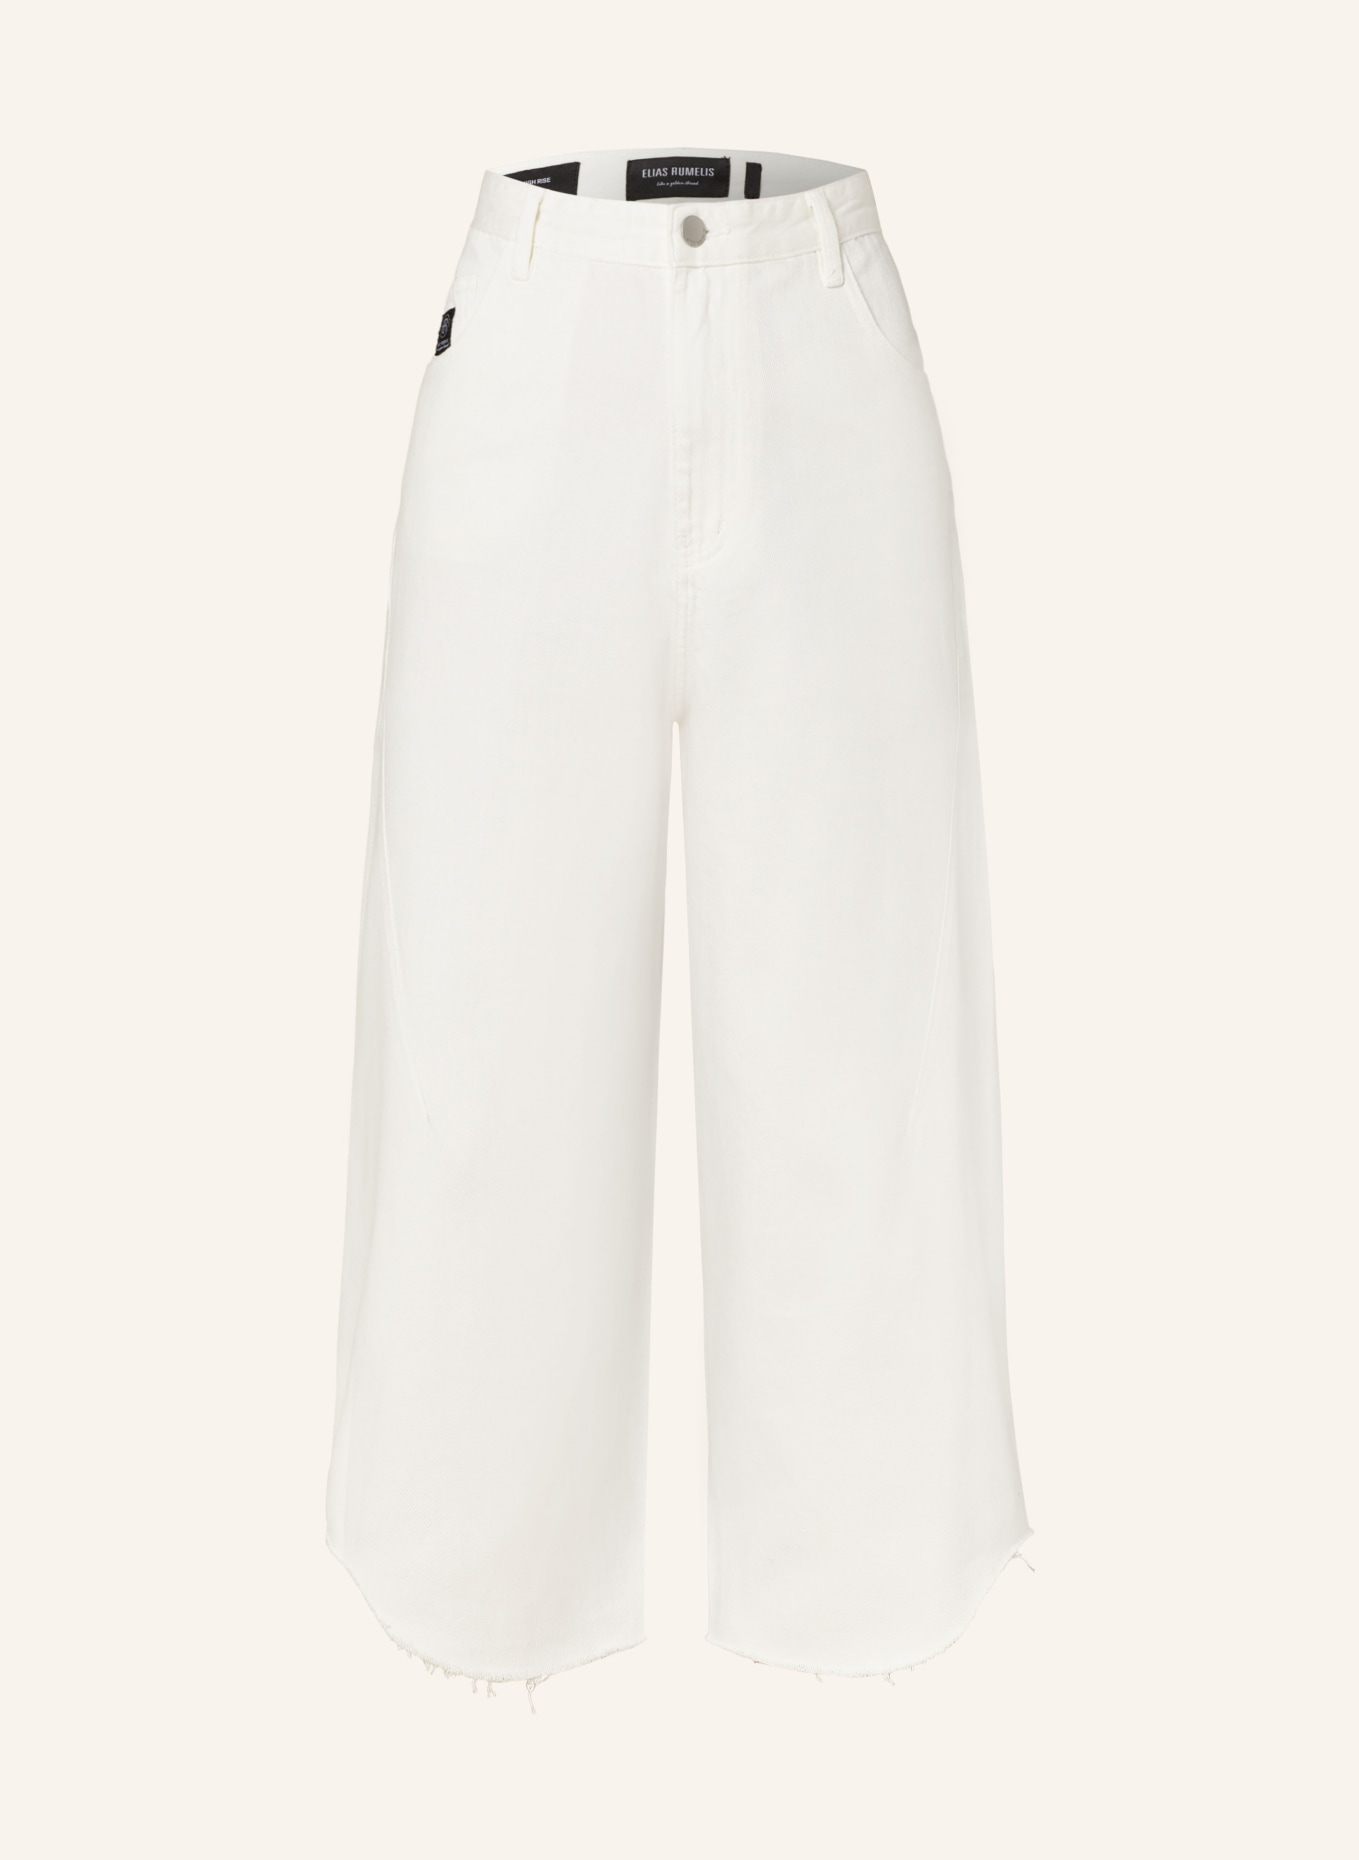 ELIAS RUMELIS Jeans-Culotte ERROMIE, Farbe: 253 off-white (Bild 1)